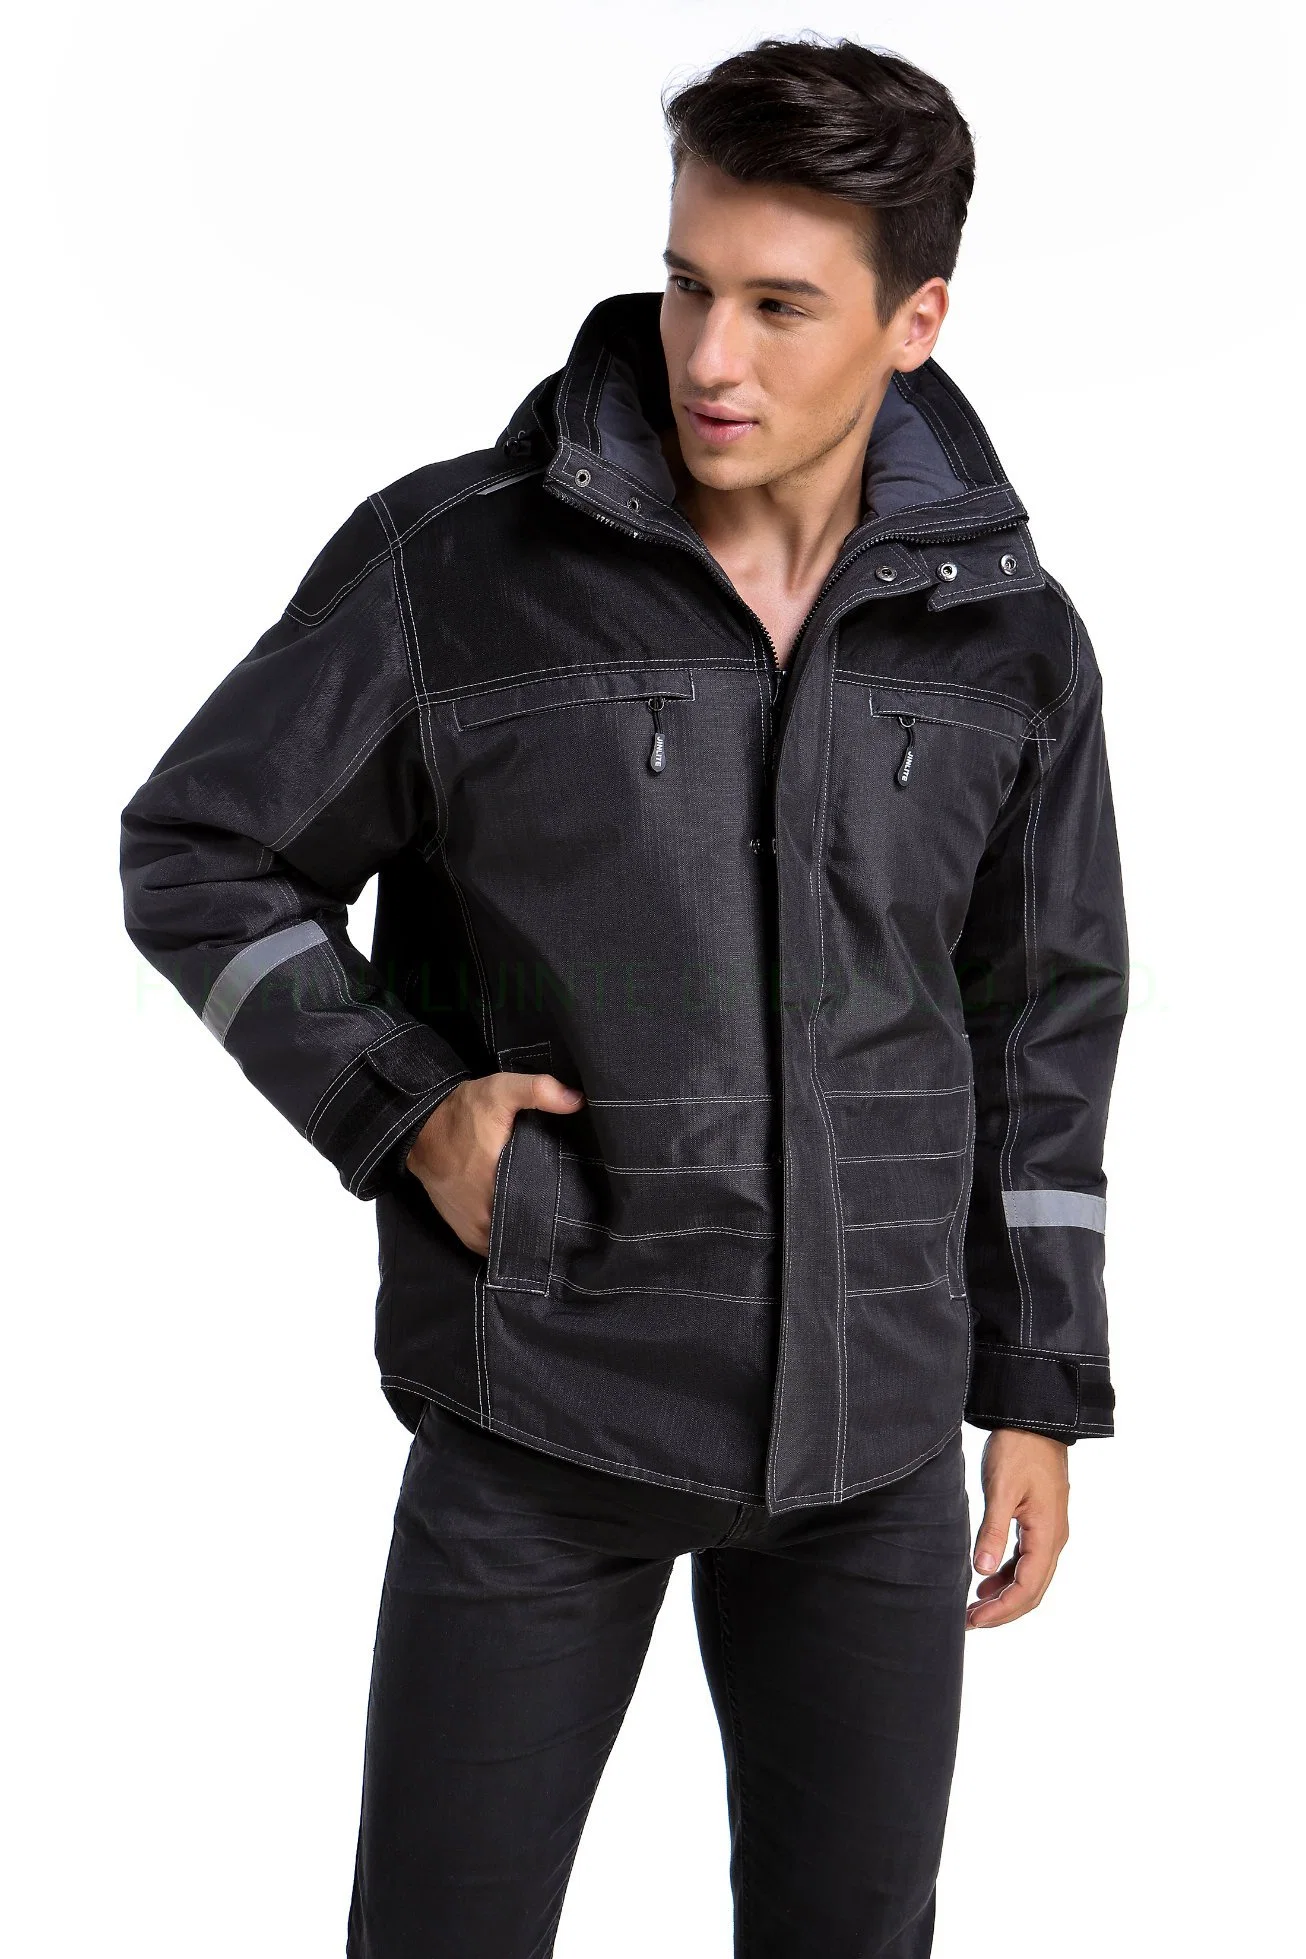 Winter Reflective Industrial Safety Jacket Workwear